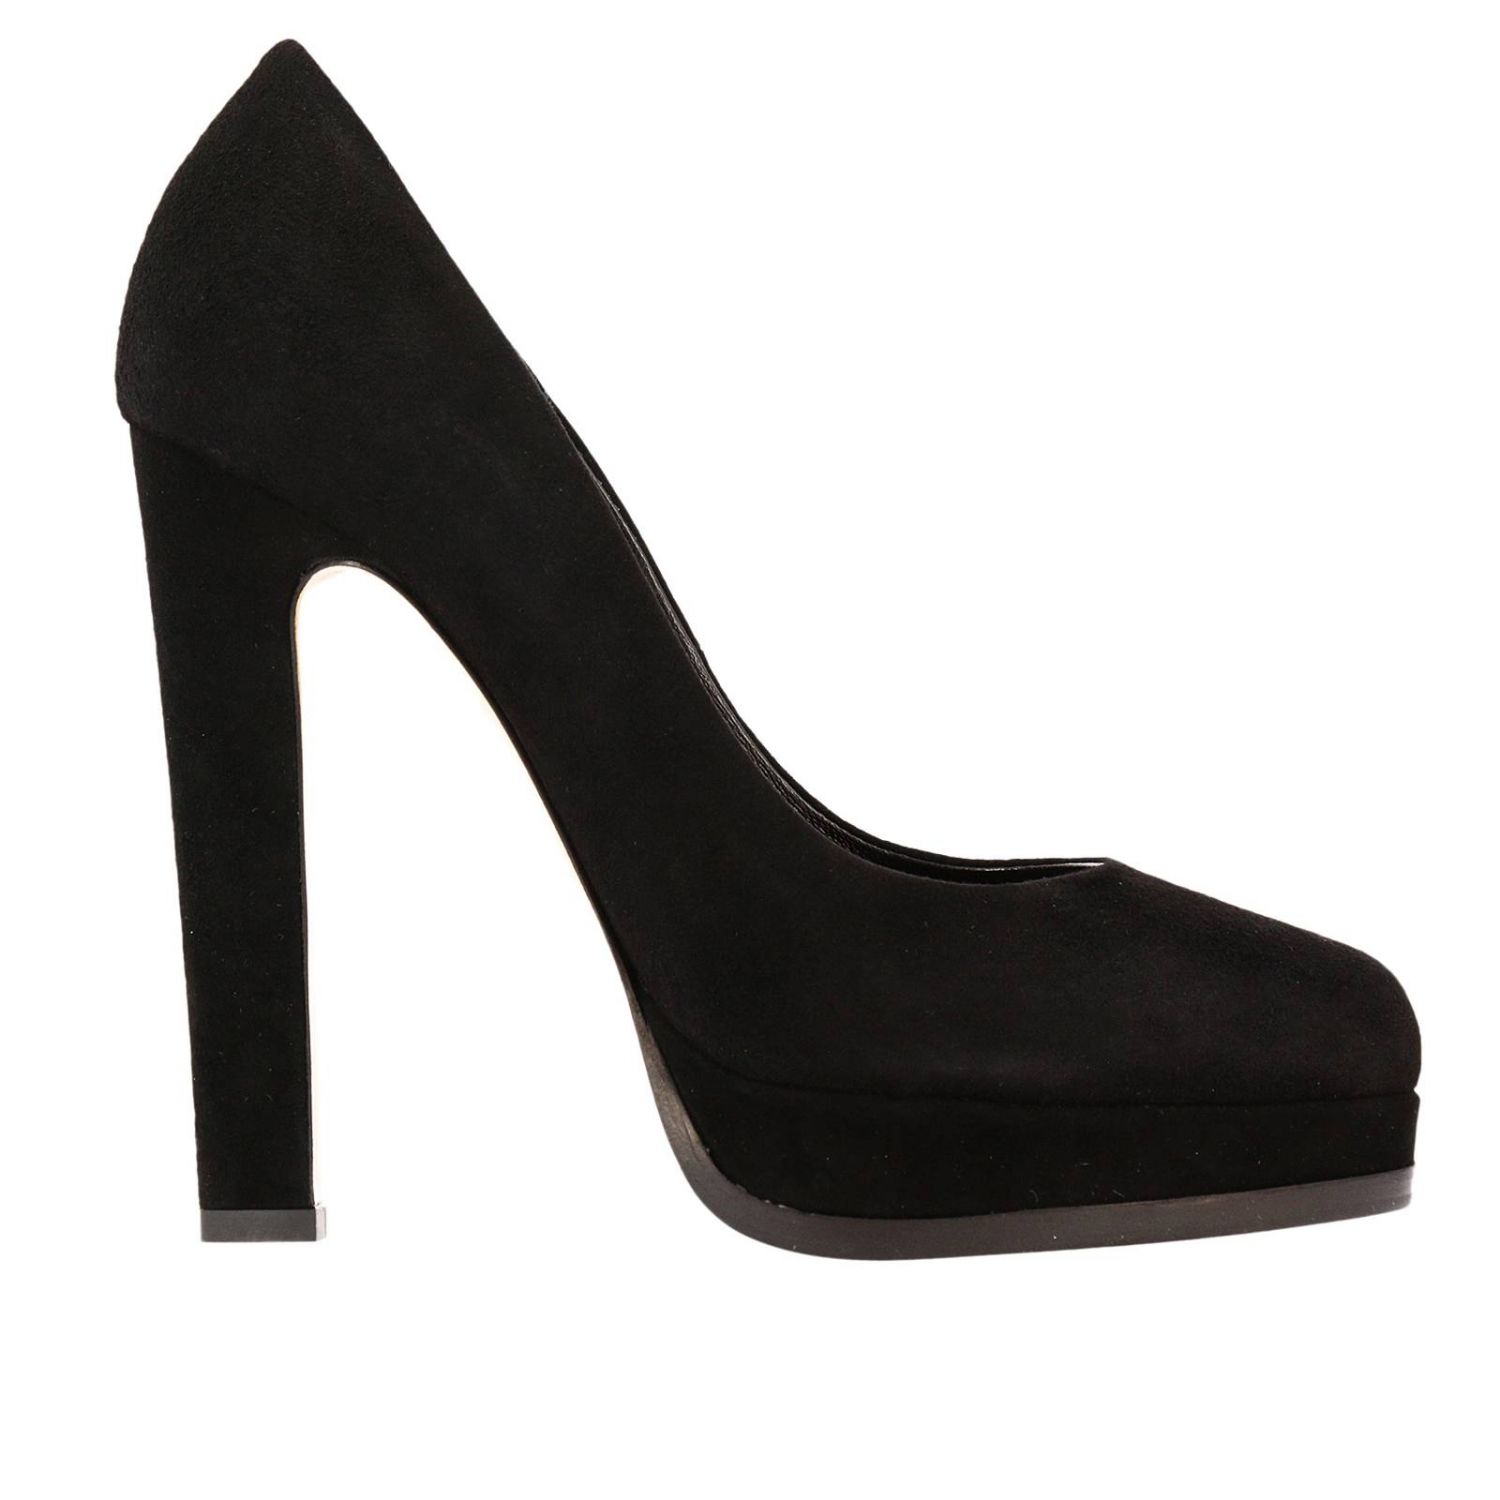 Ninalilou Outlet: Shoes women - Black | Pumps Ninalilou 252500C/17 ...